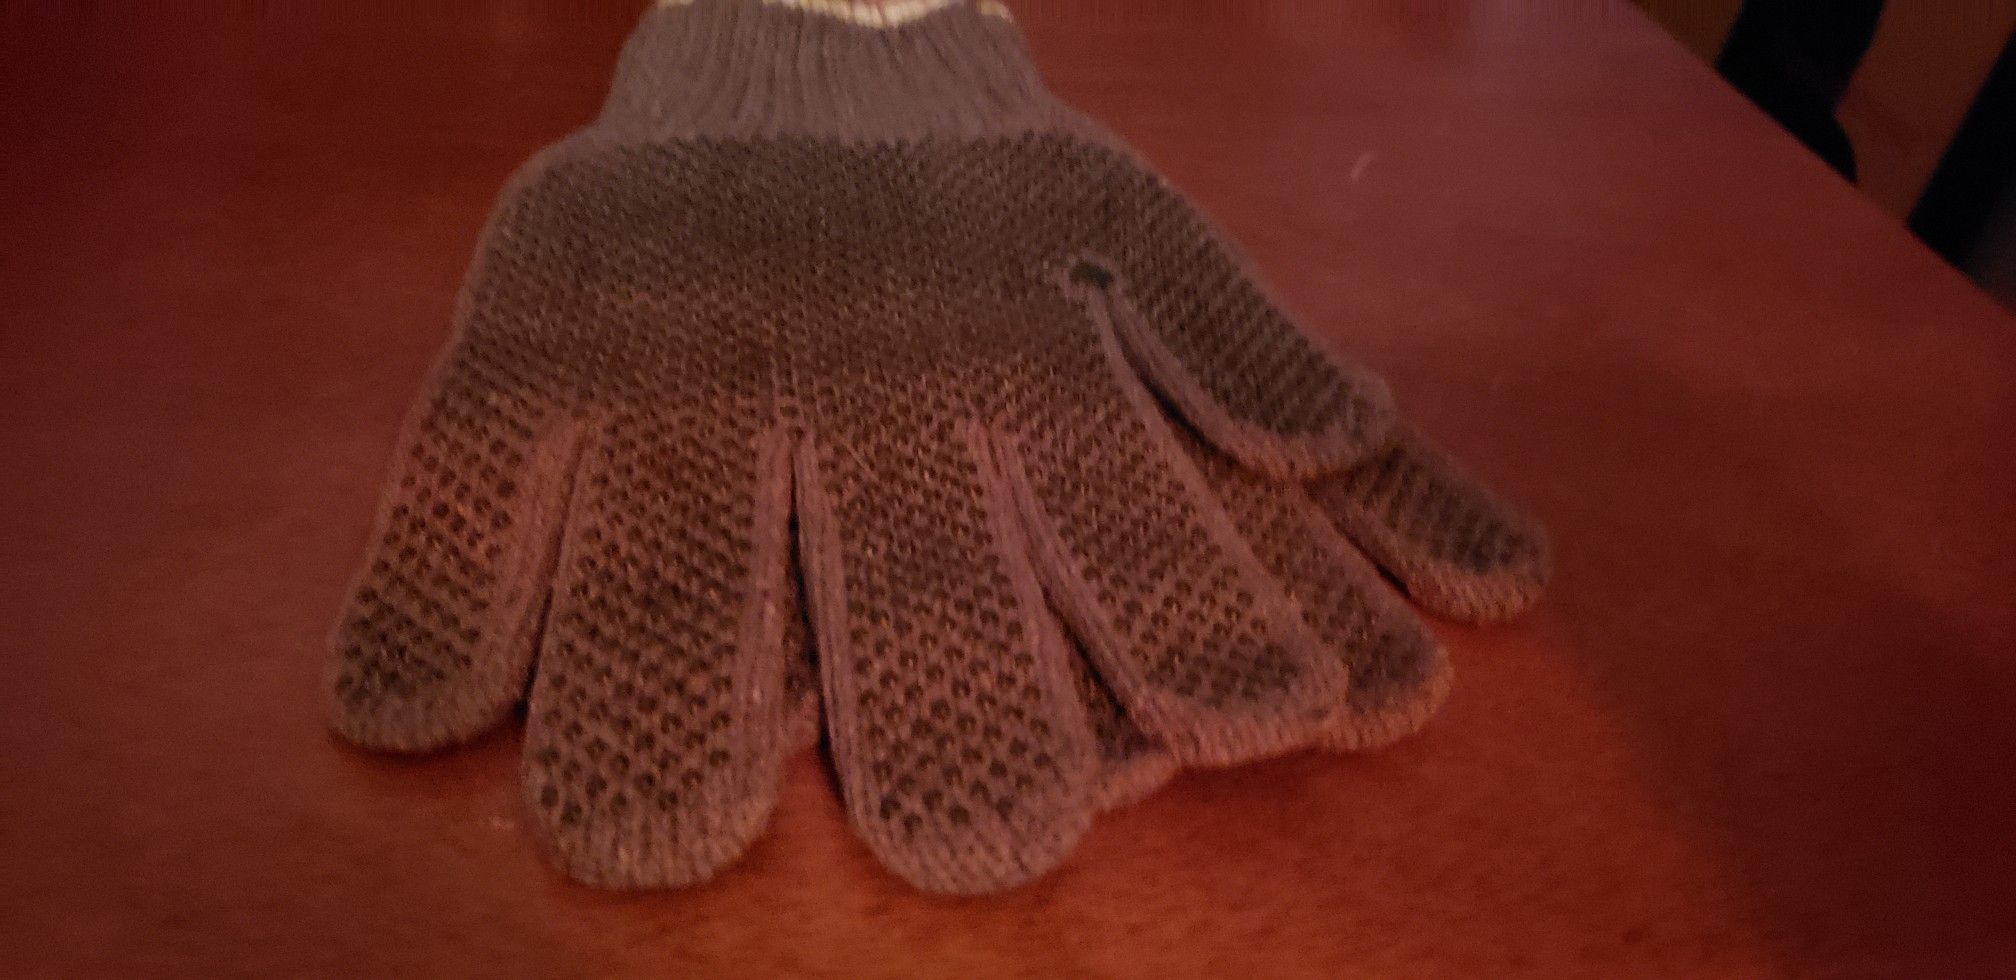 Construction Gloves